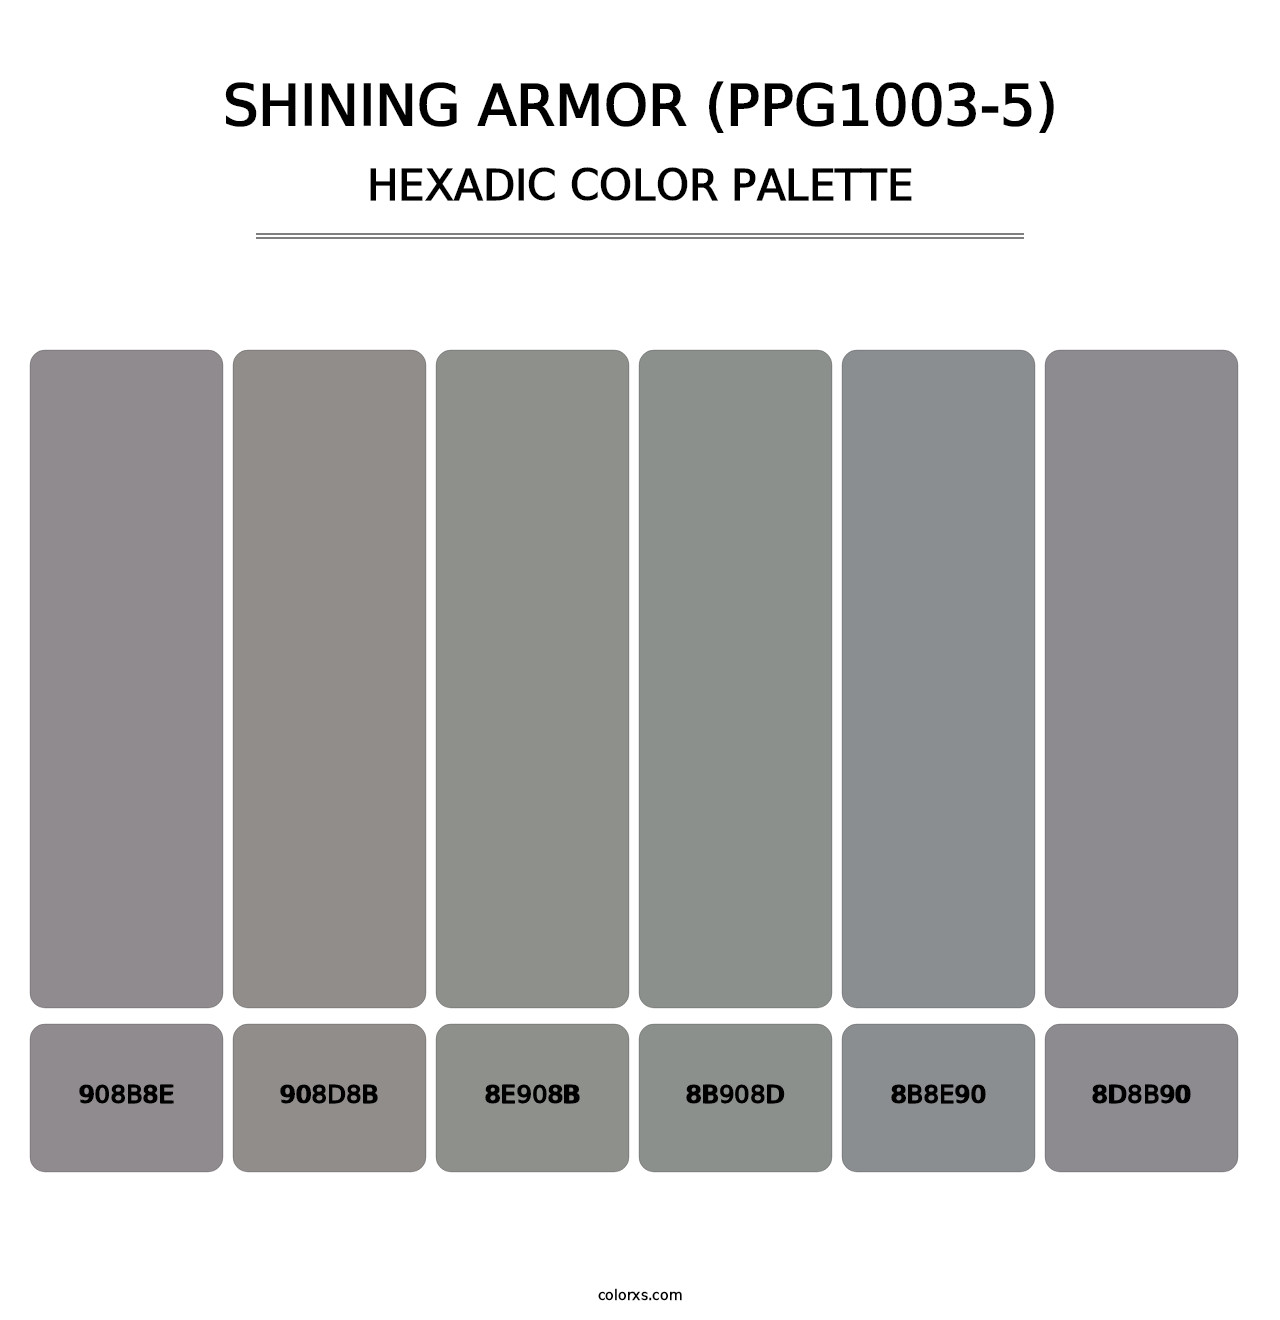 Shining Armor (PPG1003-5) - Hexadic Color Palette